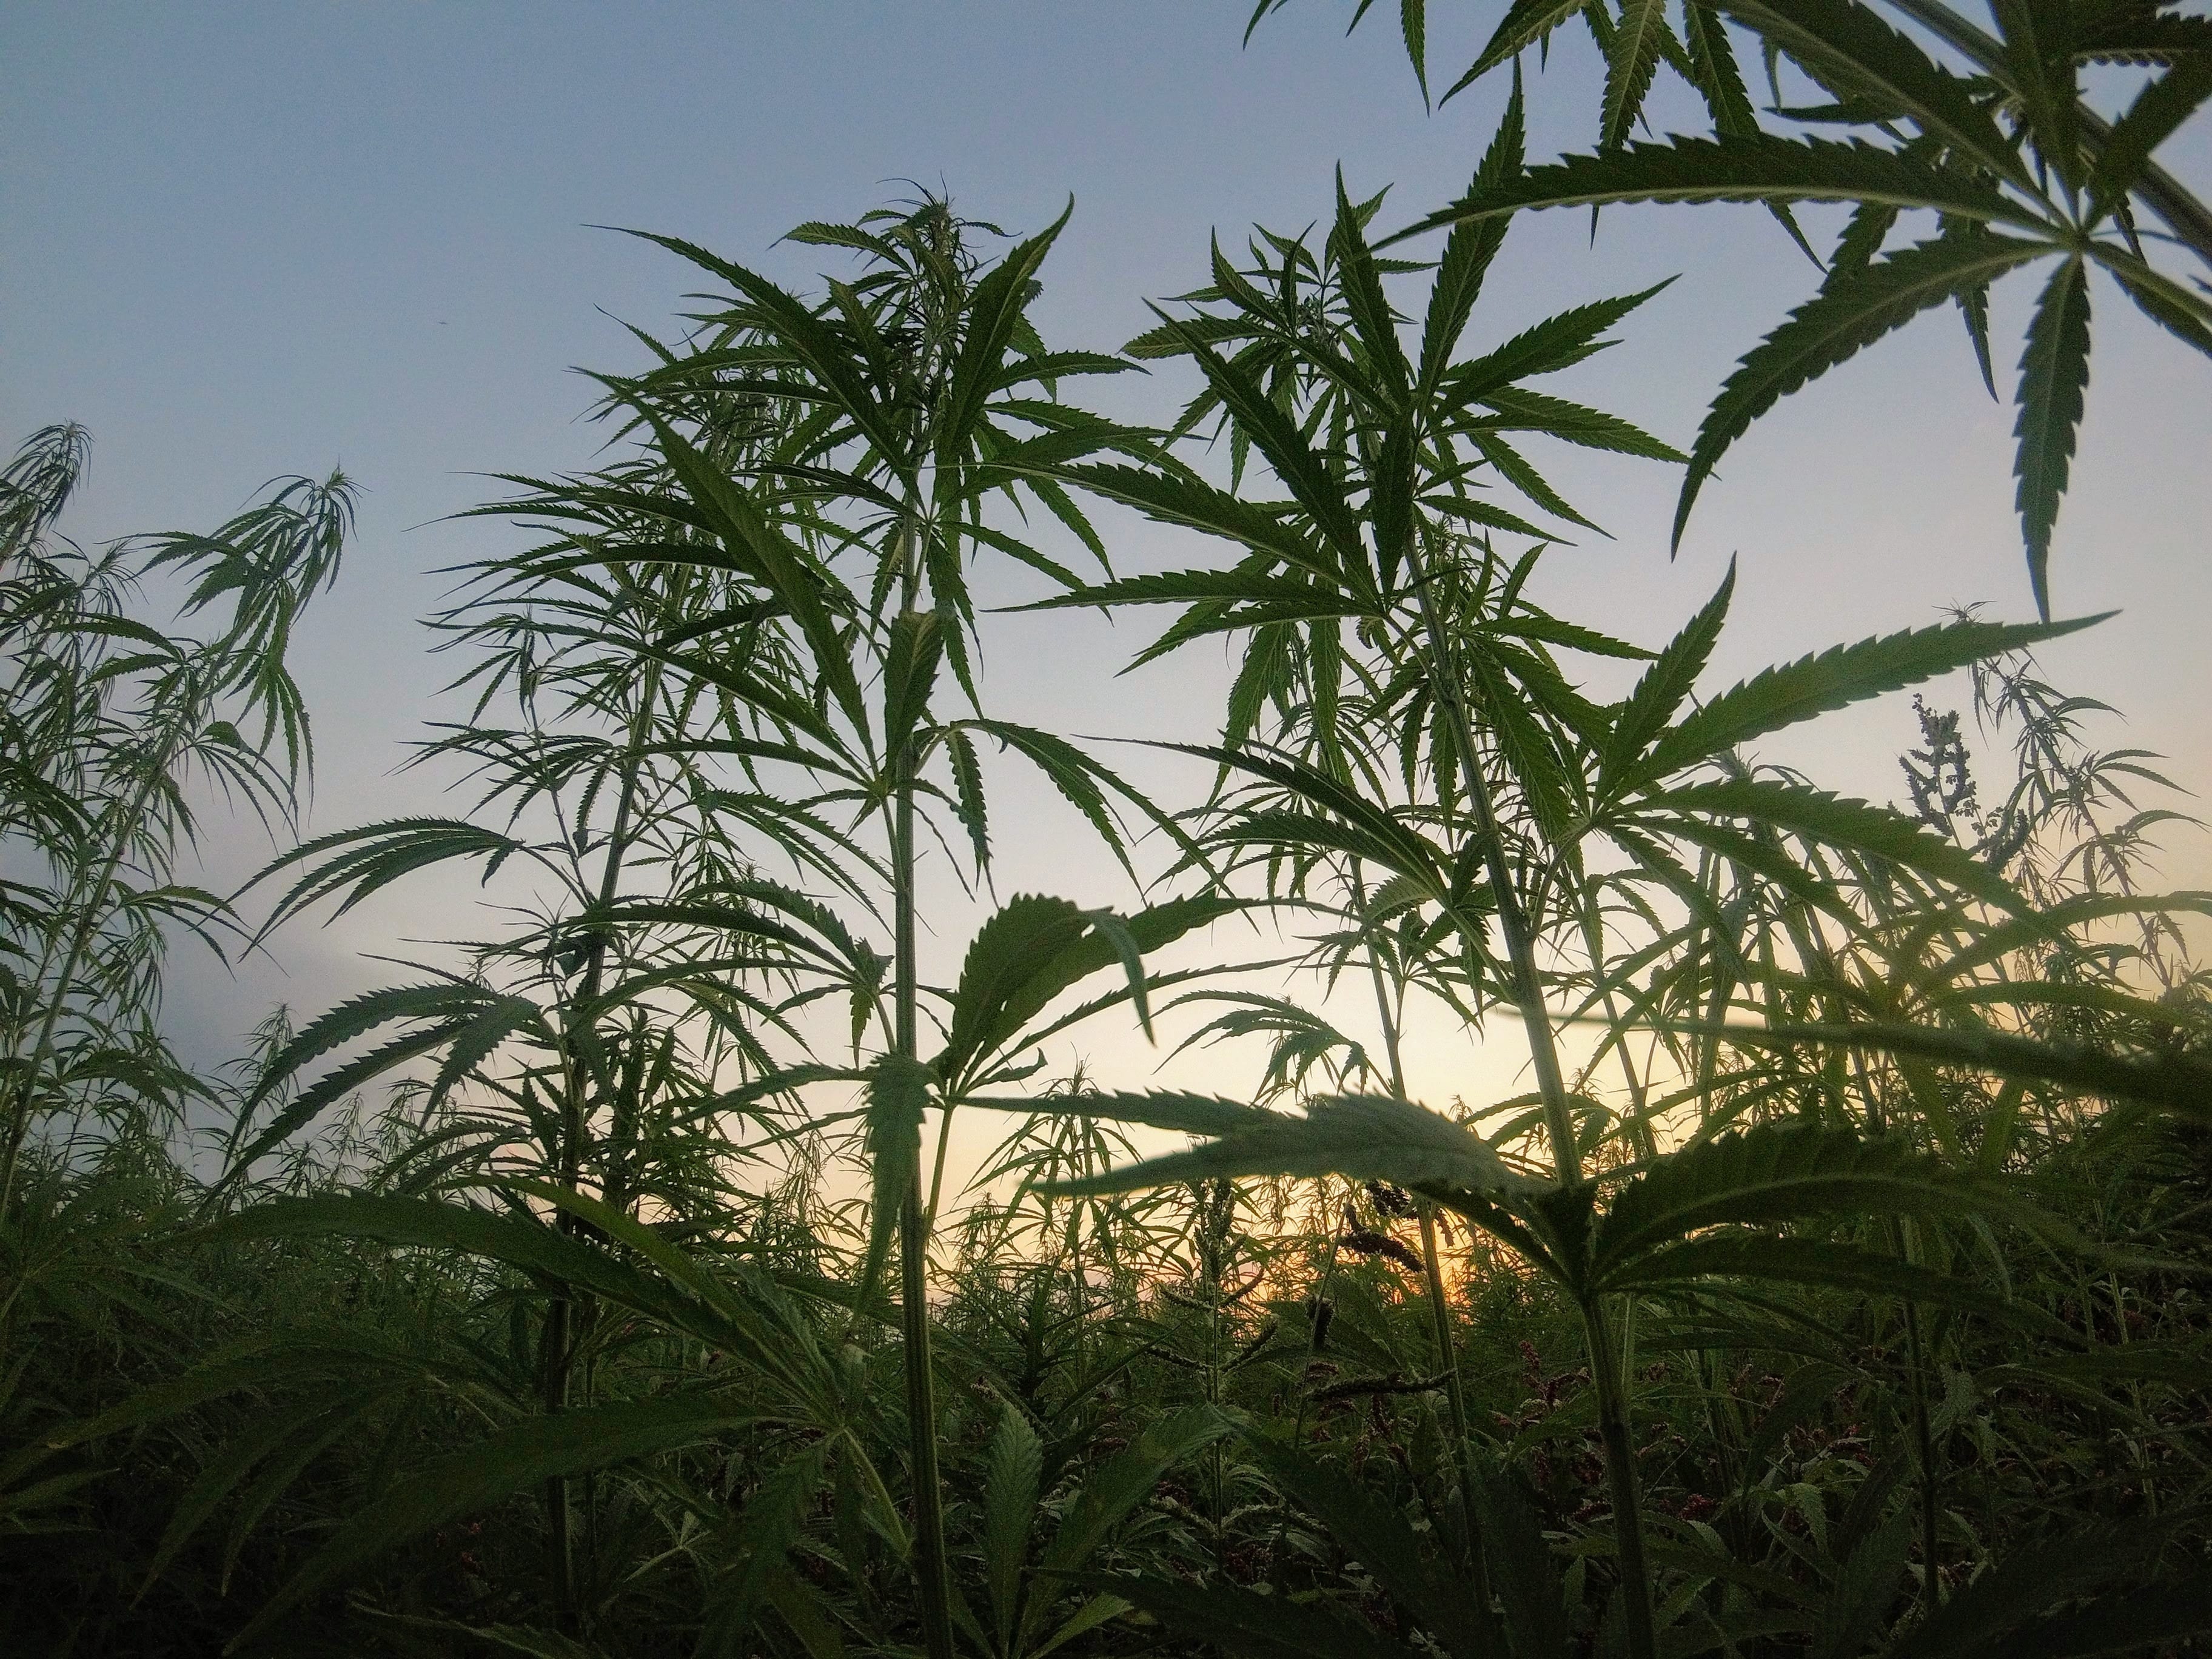 Marijuana field at sunrise; image by Matteo Paganelli, via unsplash.com.